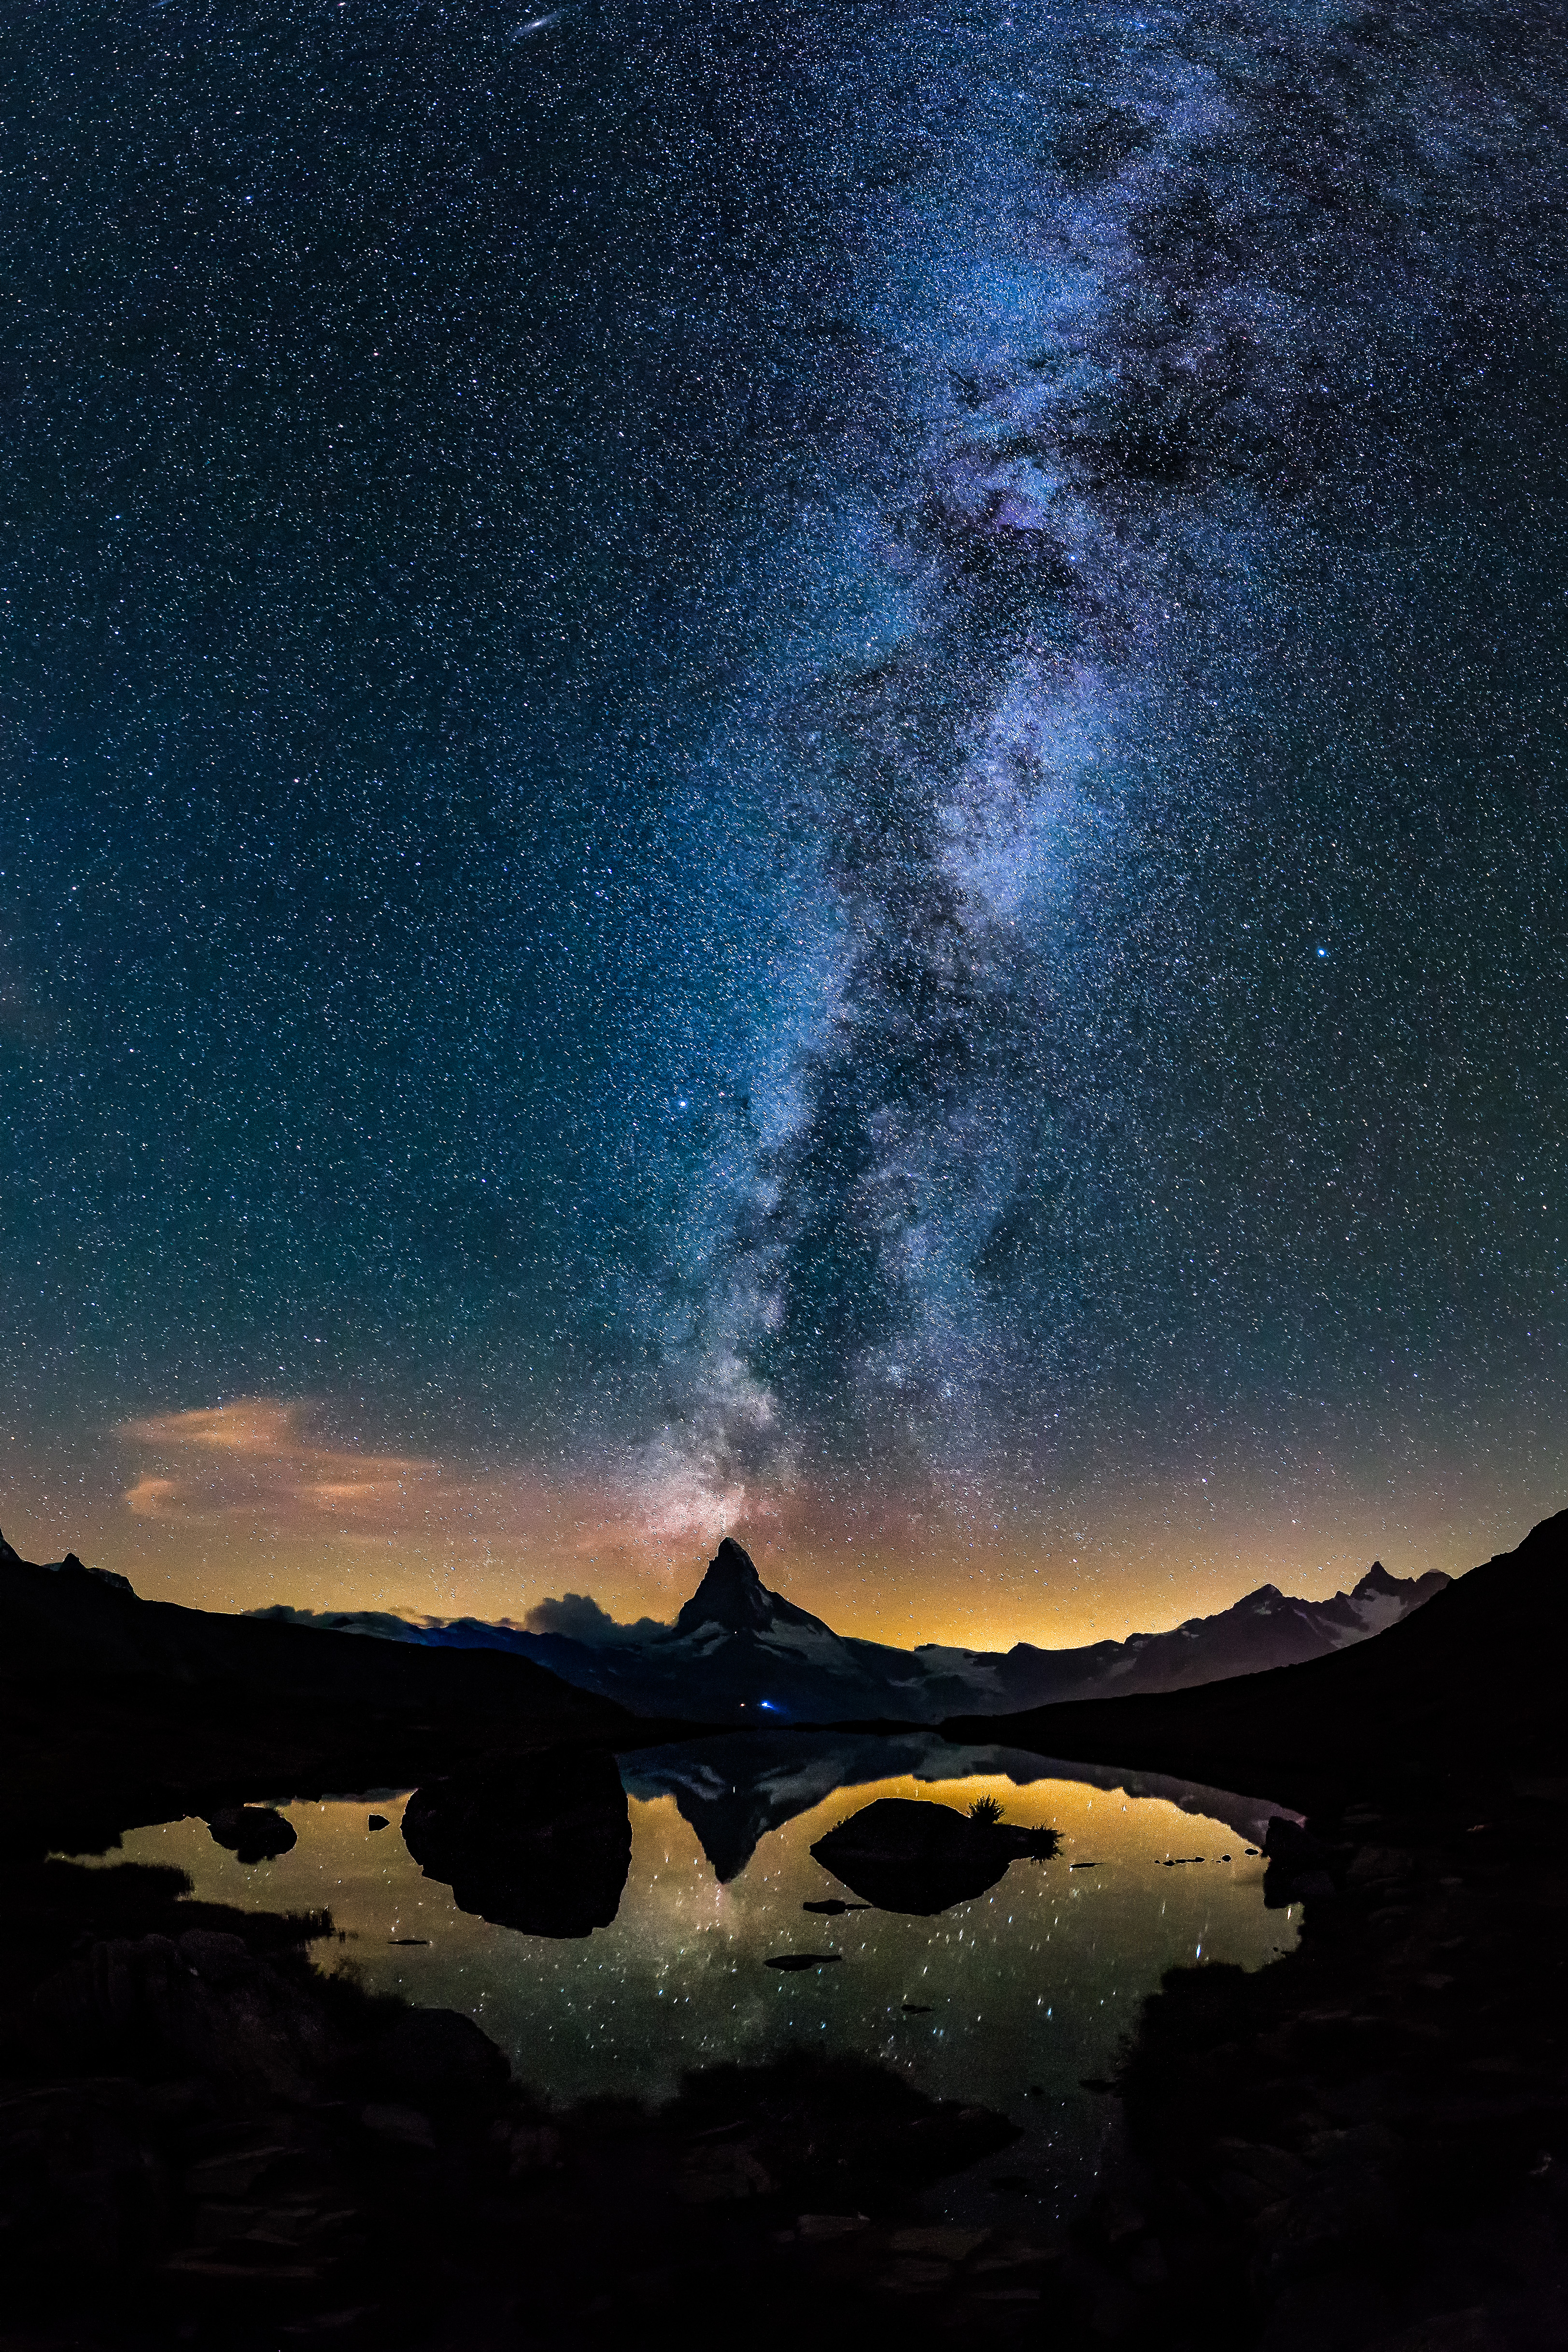 Free HD universe, nature, mountains, lake, starry sky